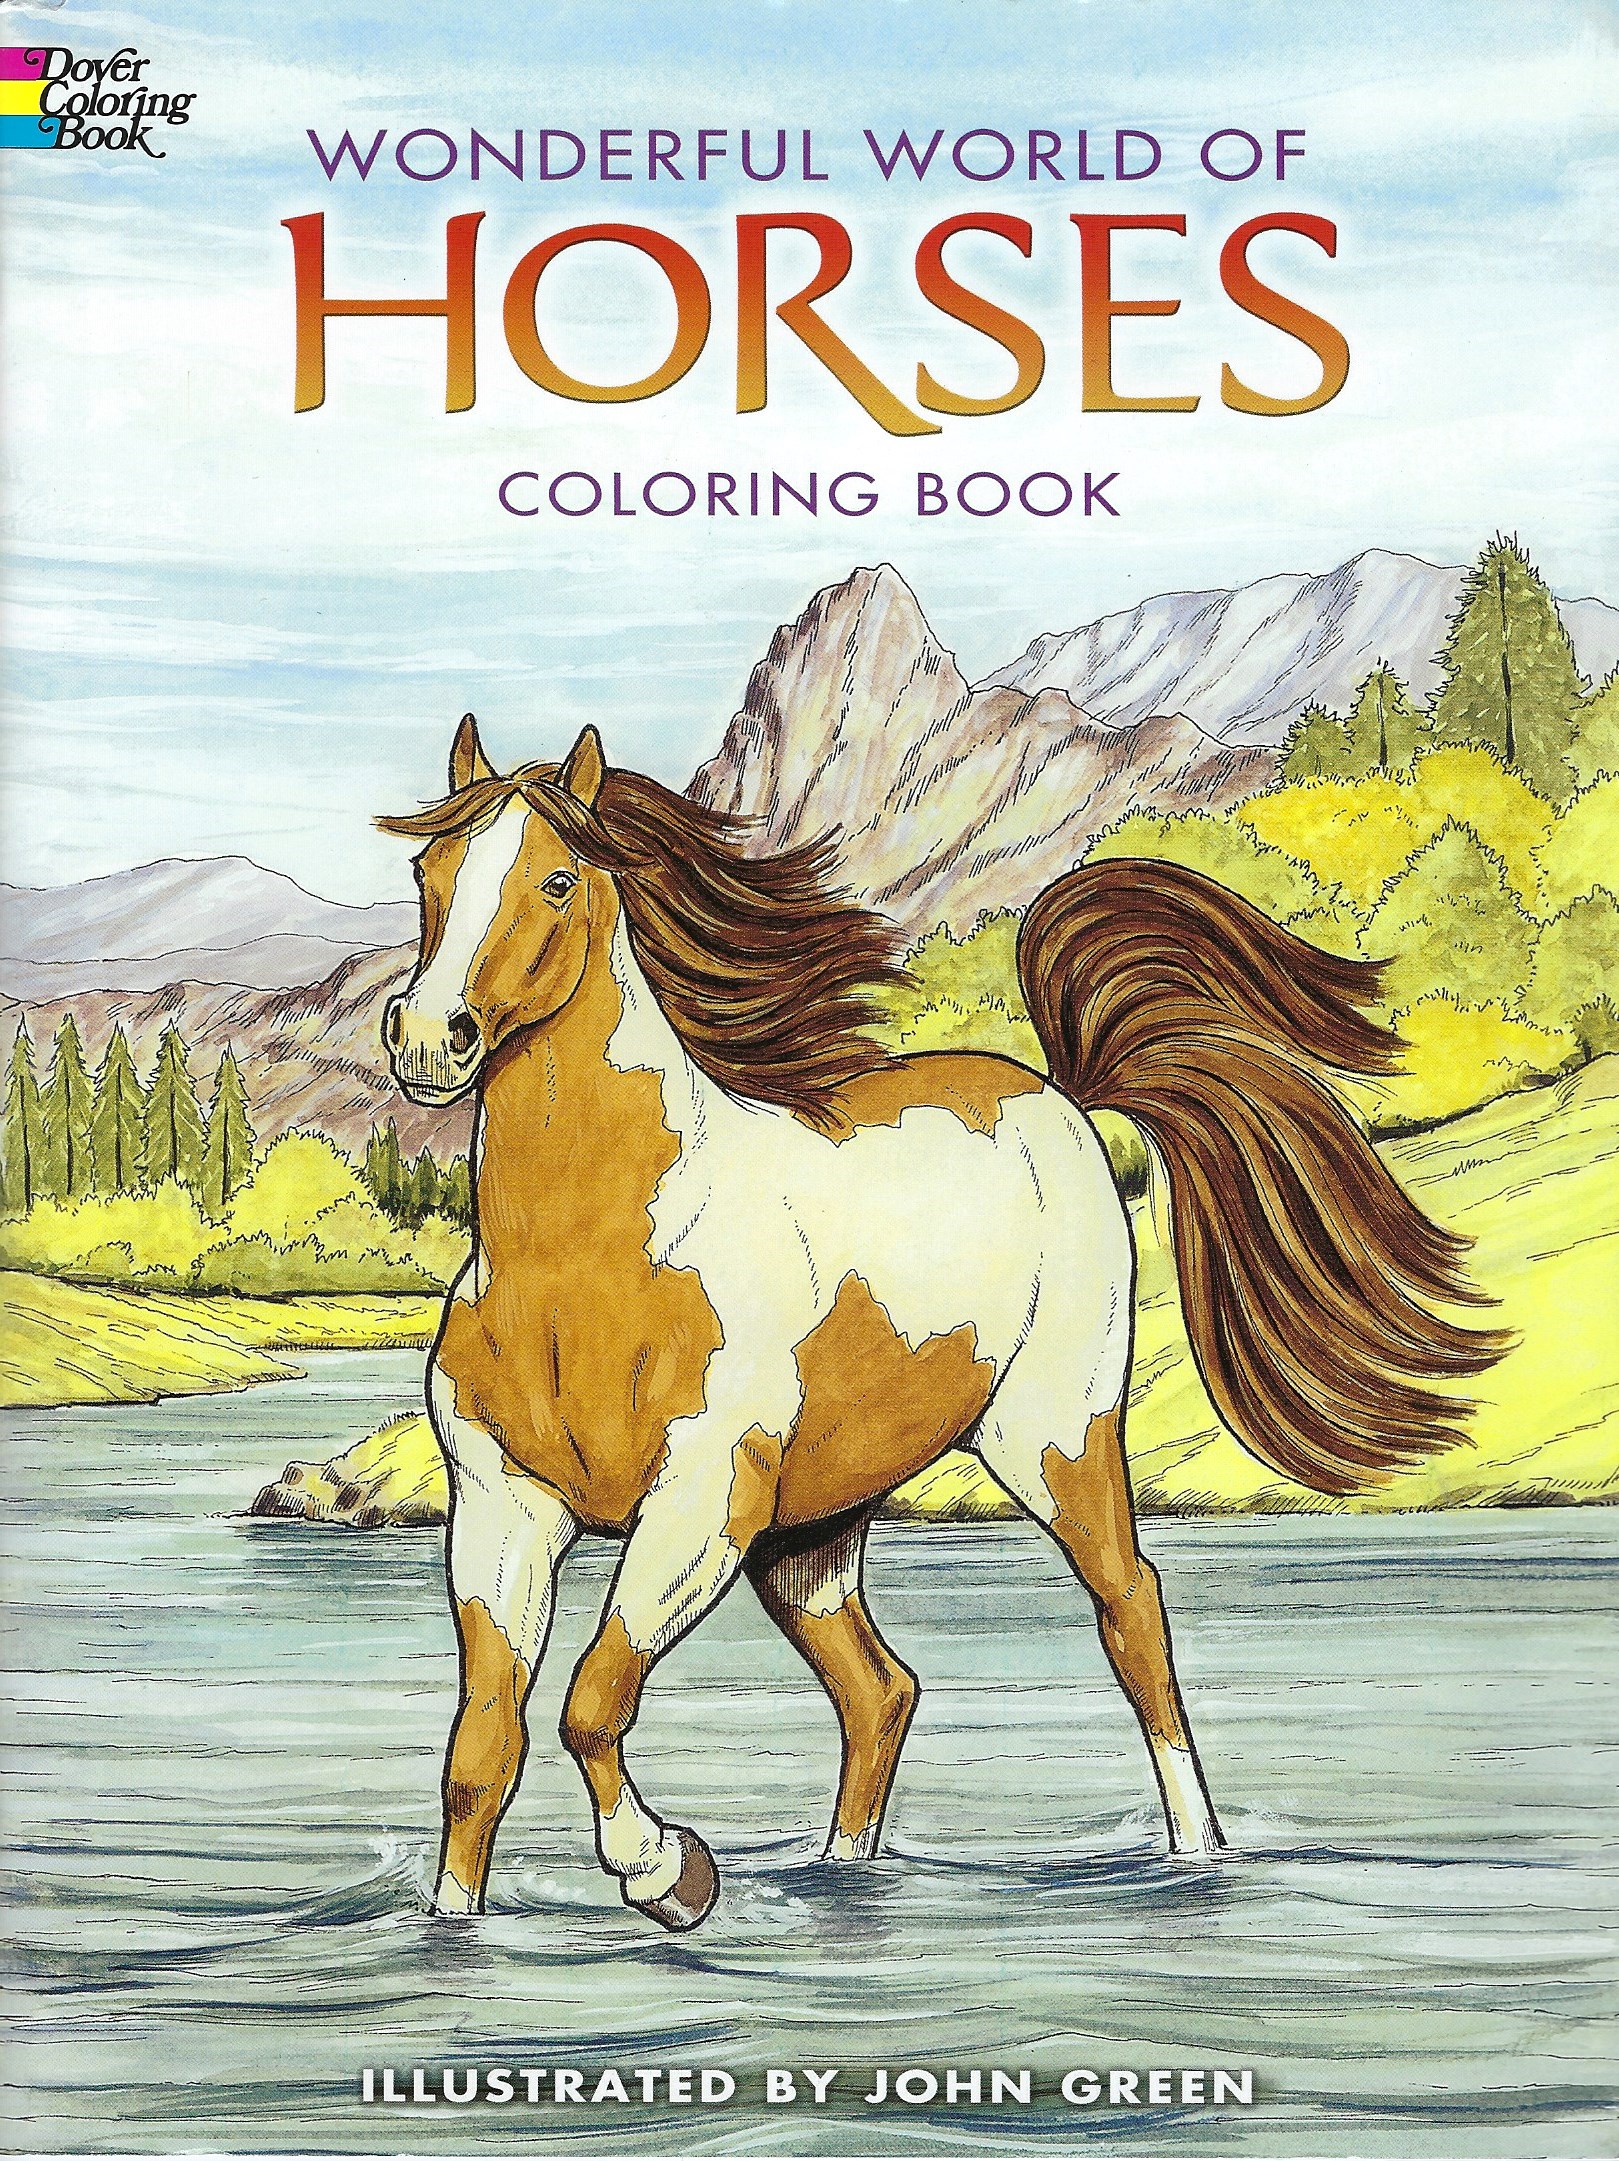 WONDERFUL WORLD OF HORSES COLORING BOOK